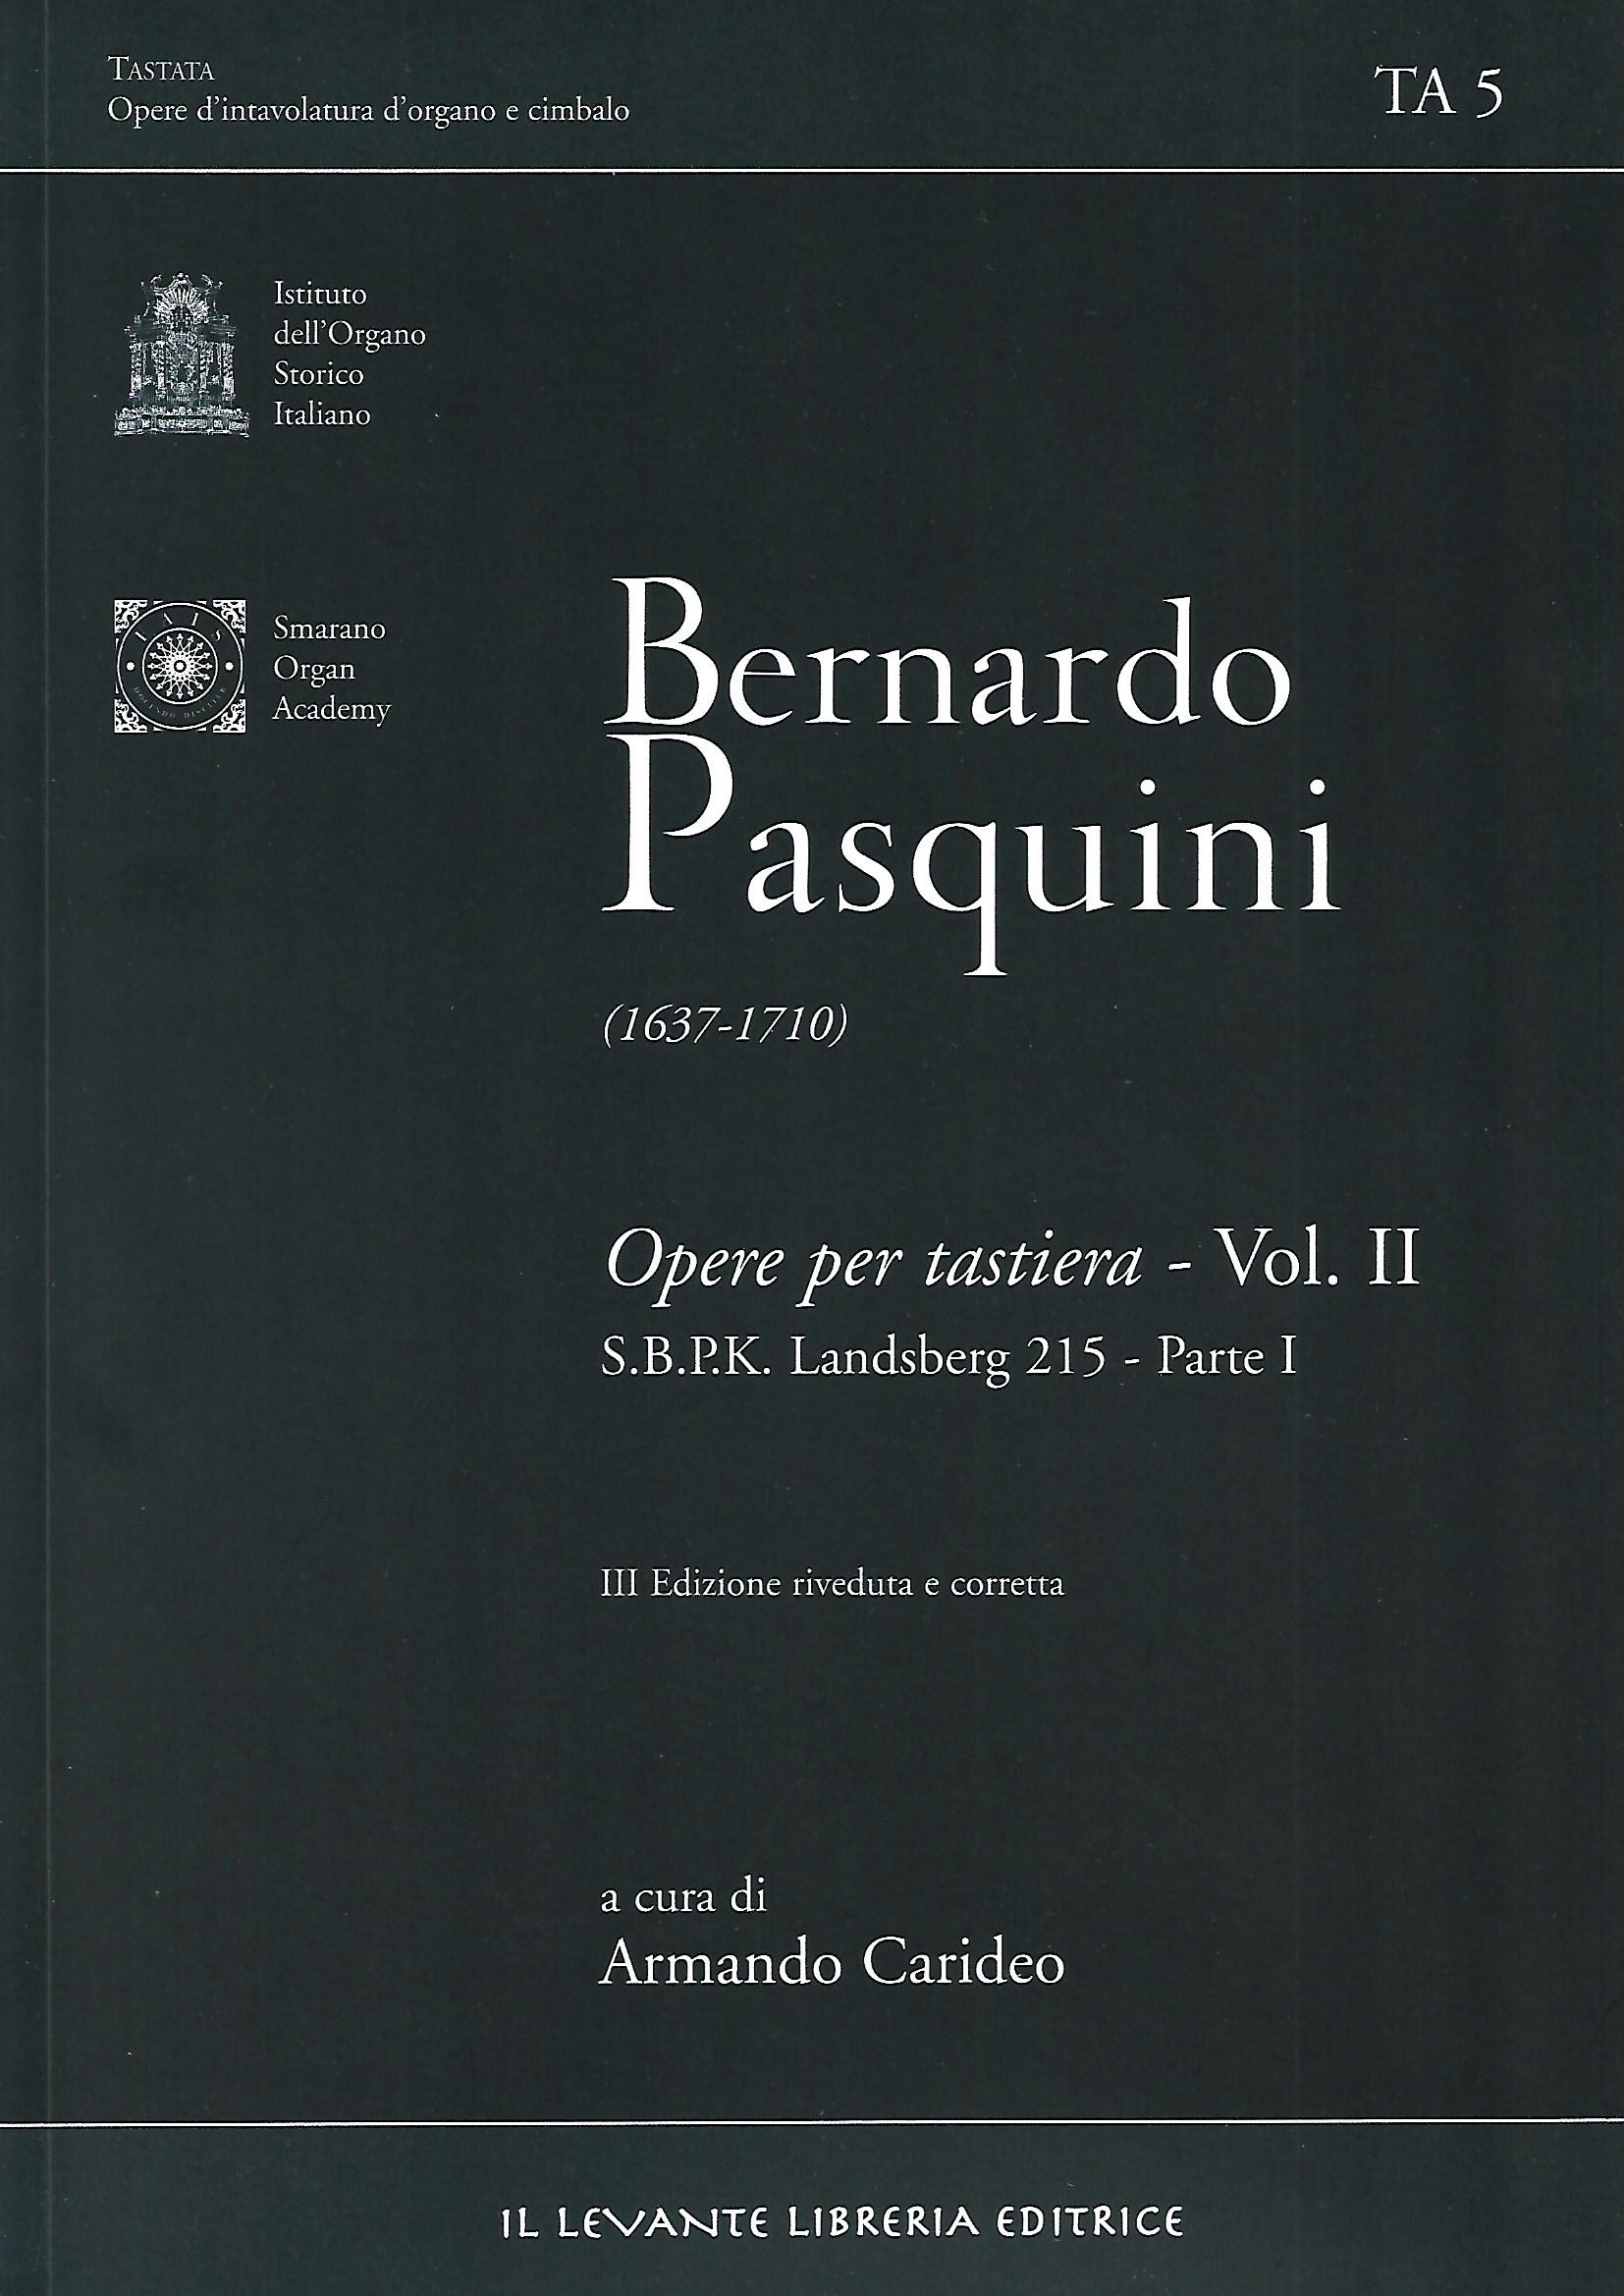 TA 5 Pasquini Bernardo - Opere per tastiera, Vol. II - S.B.p.K. Landsberg 215 - Parte I